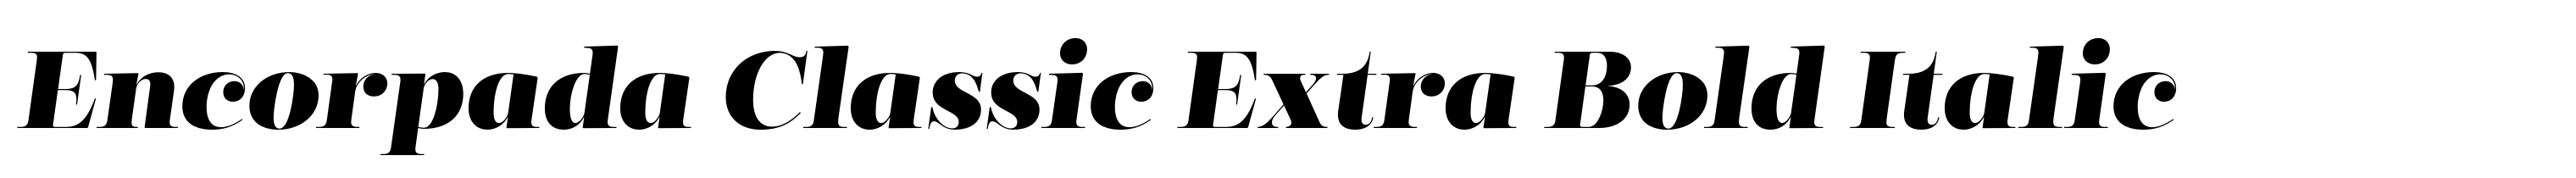 Encorpada Classic Extra Bold Italic